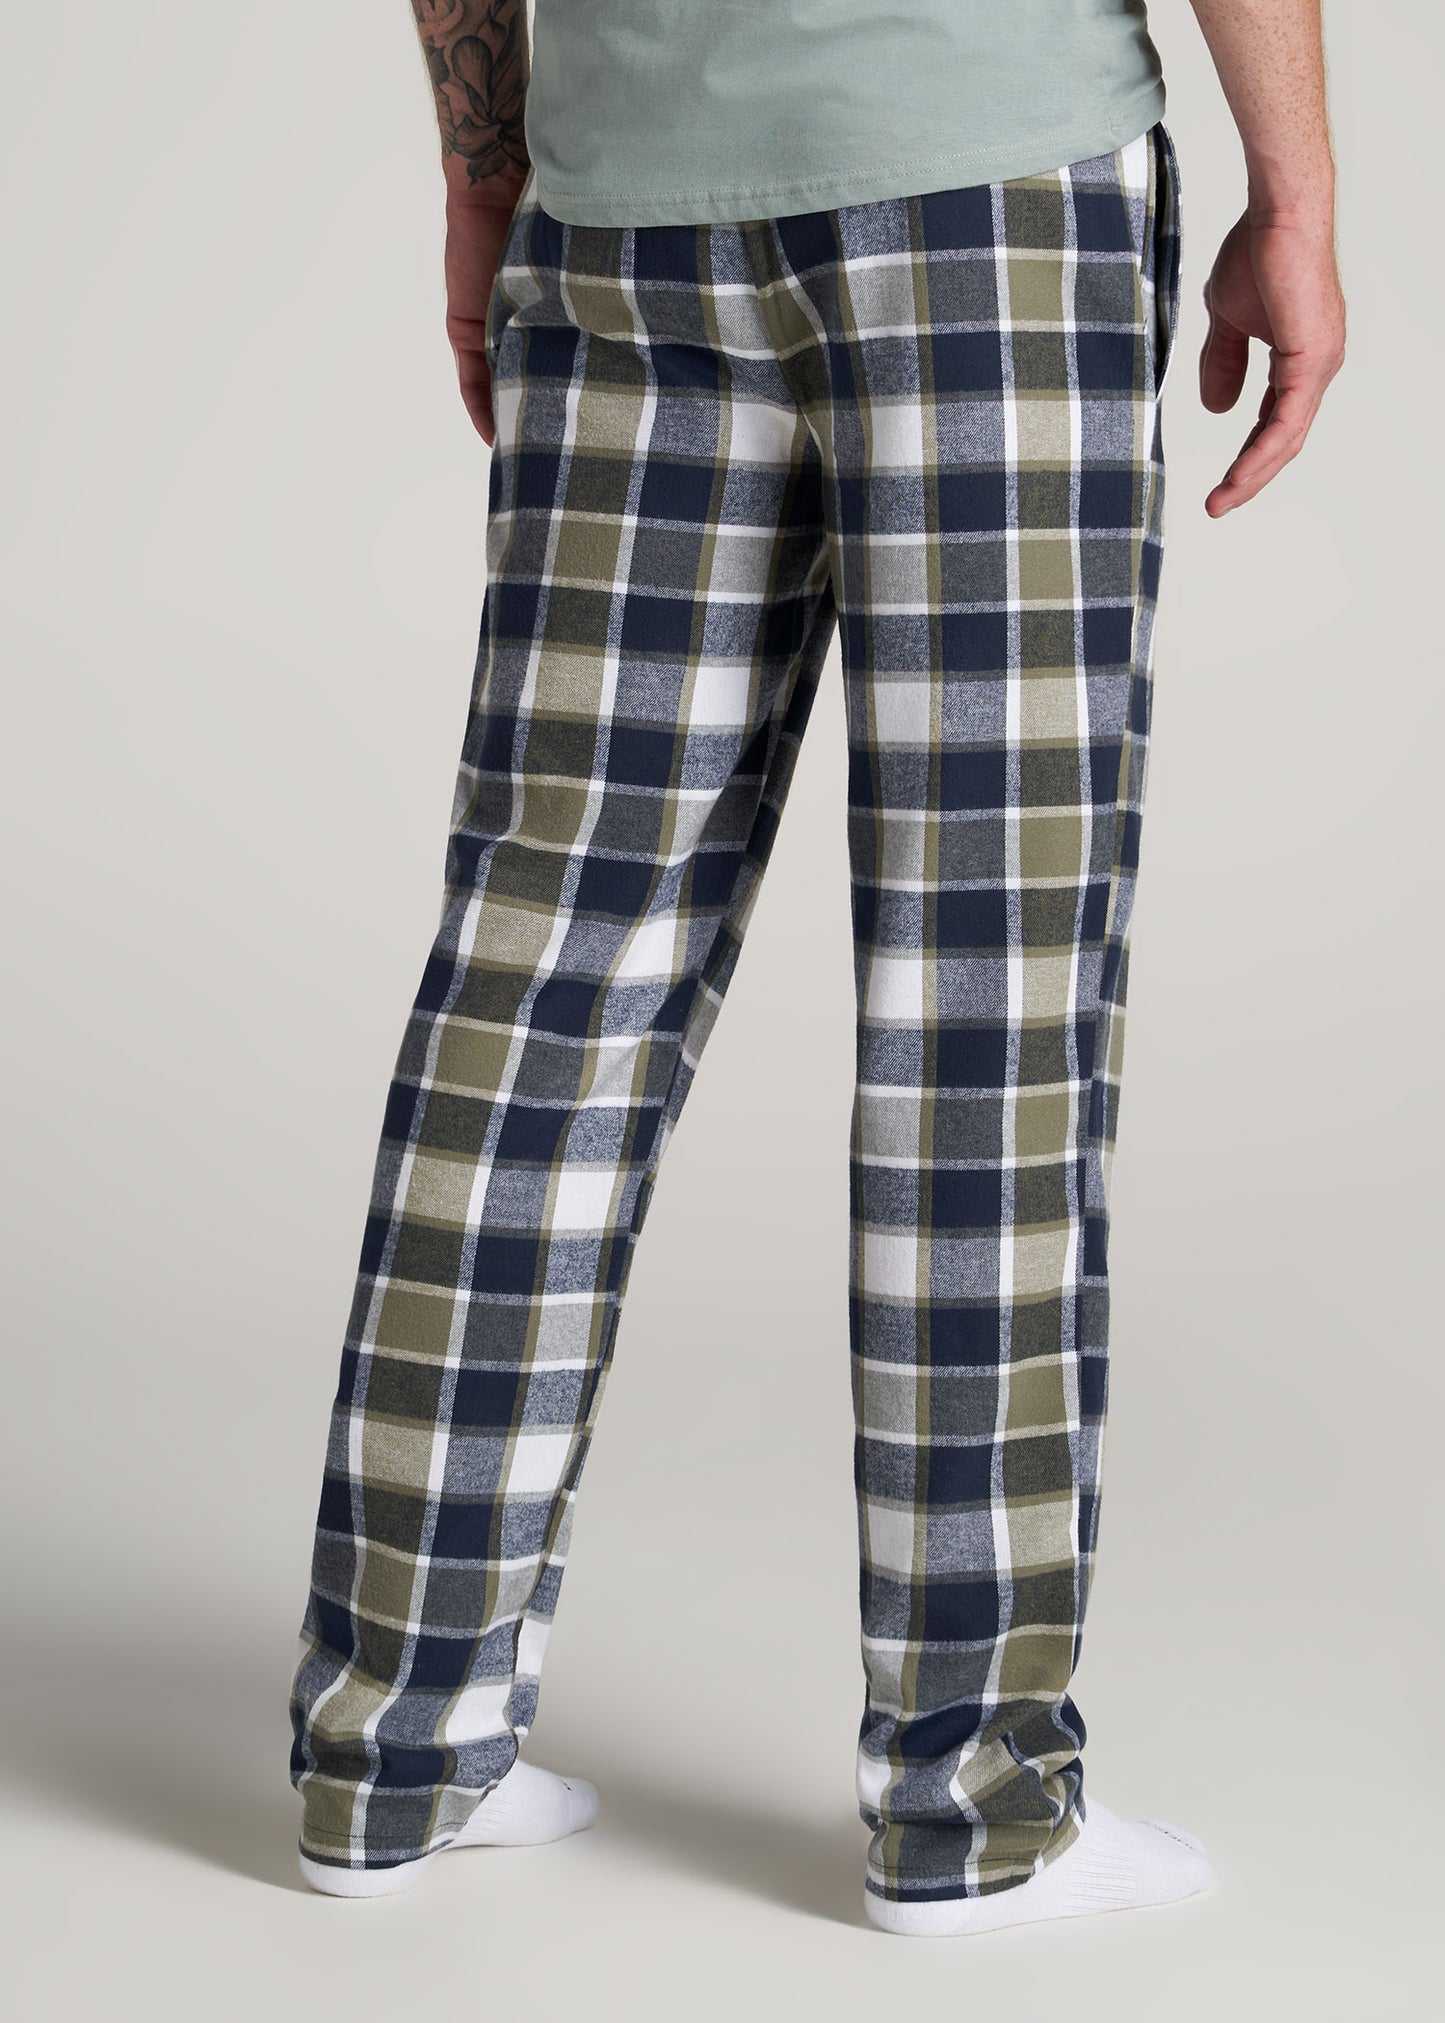 Men's Flannel Pajama Pants 2-Pack, Men's Clearance